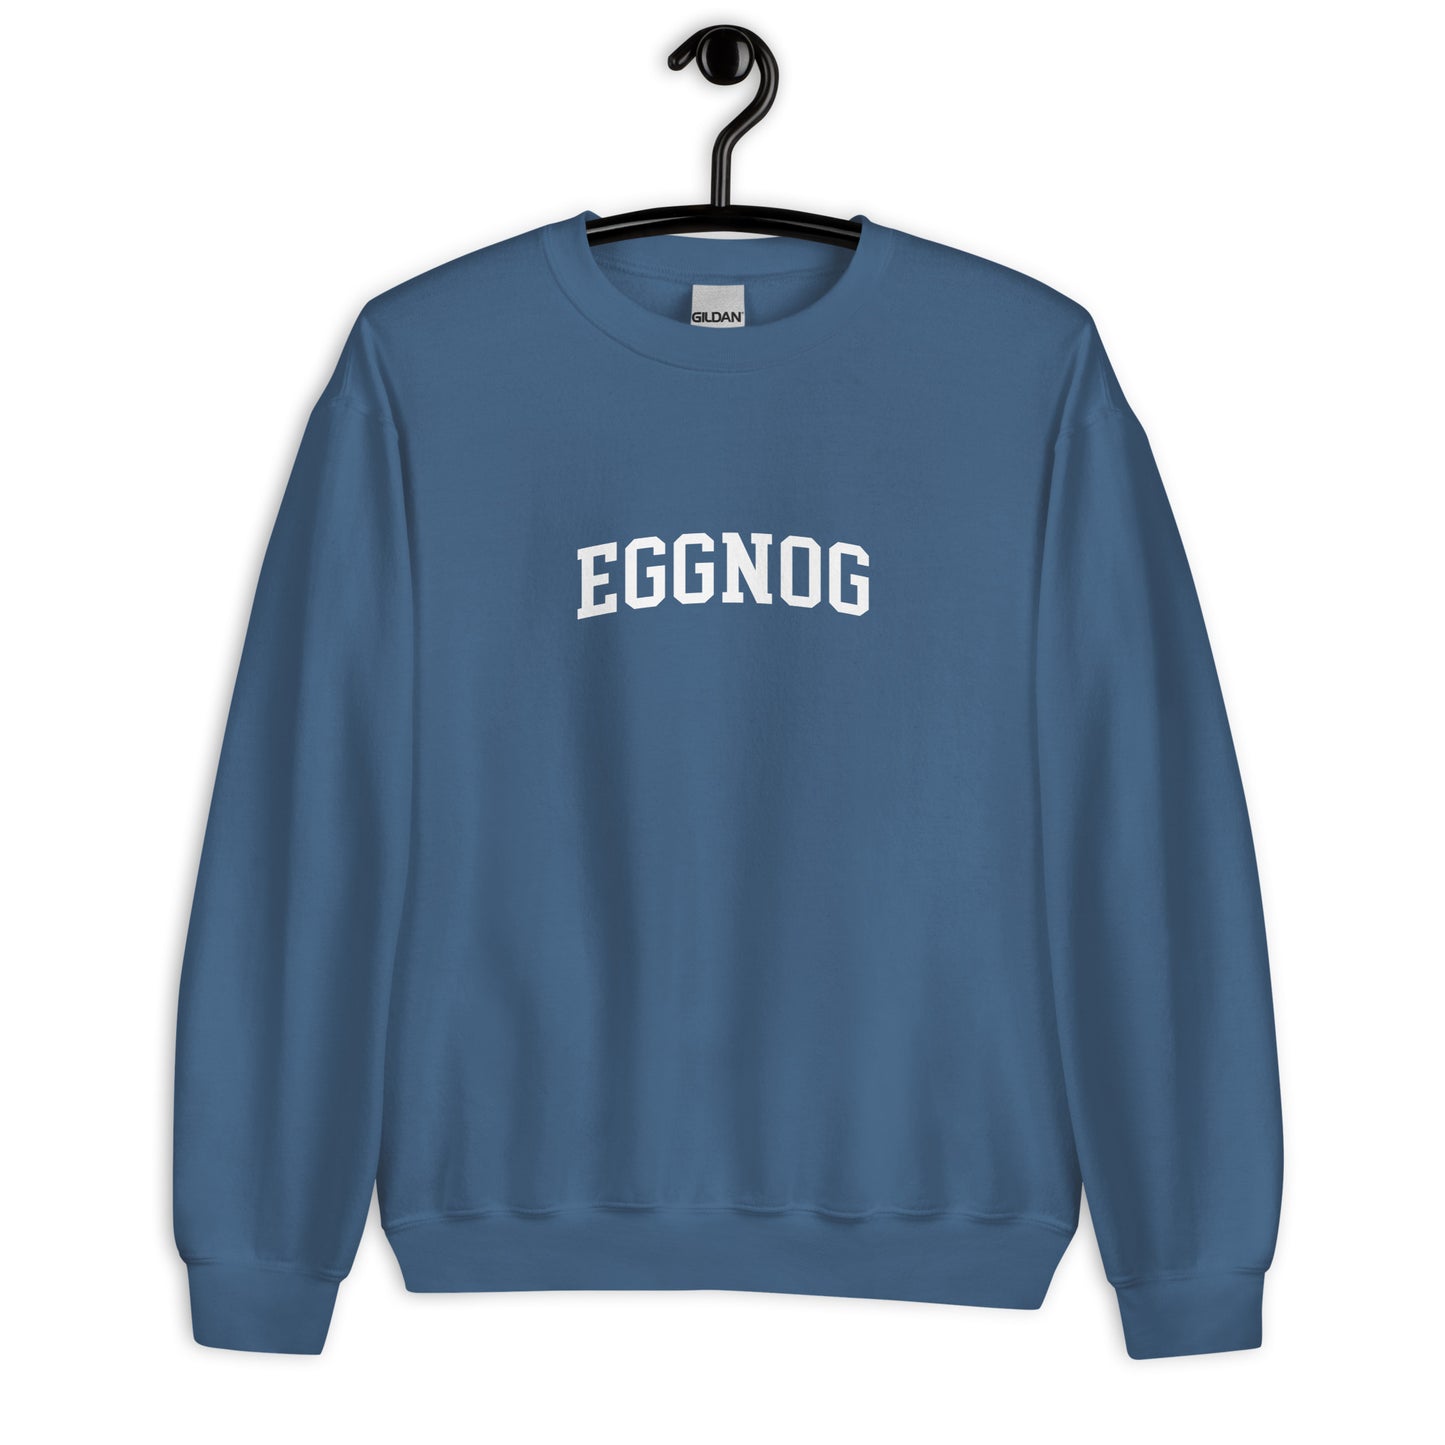 Eggnog Sweatshirt - Arched Font